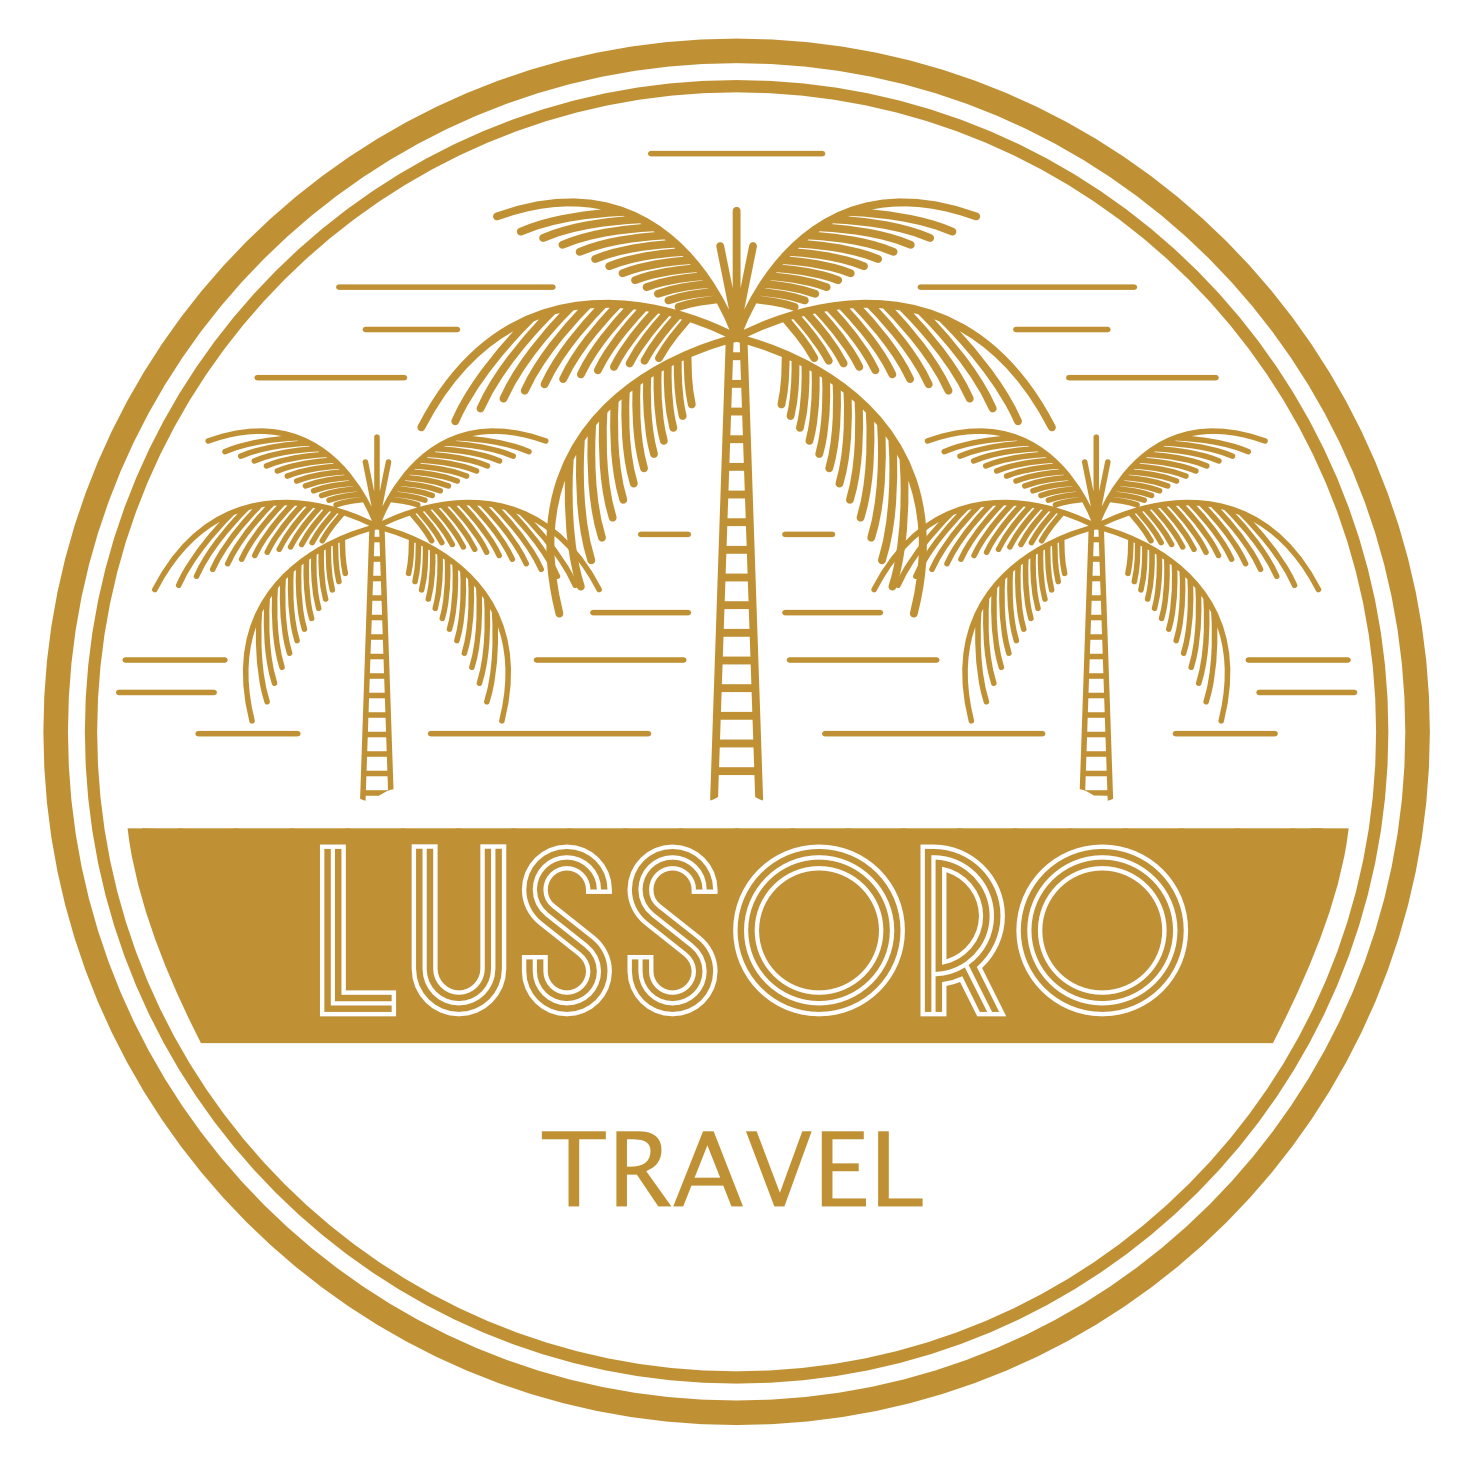 Lussoro Travel Logo PNG